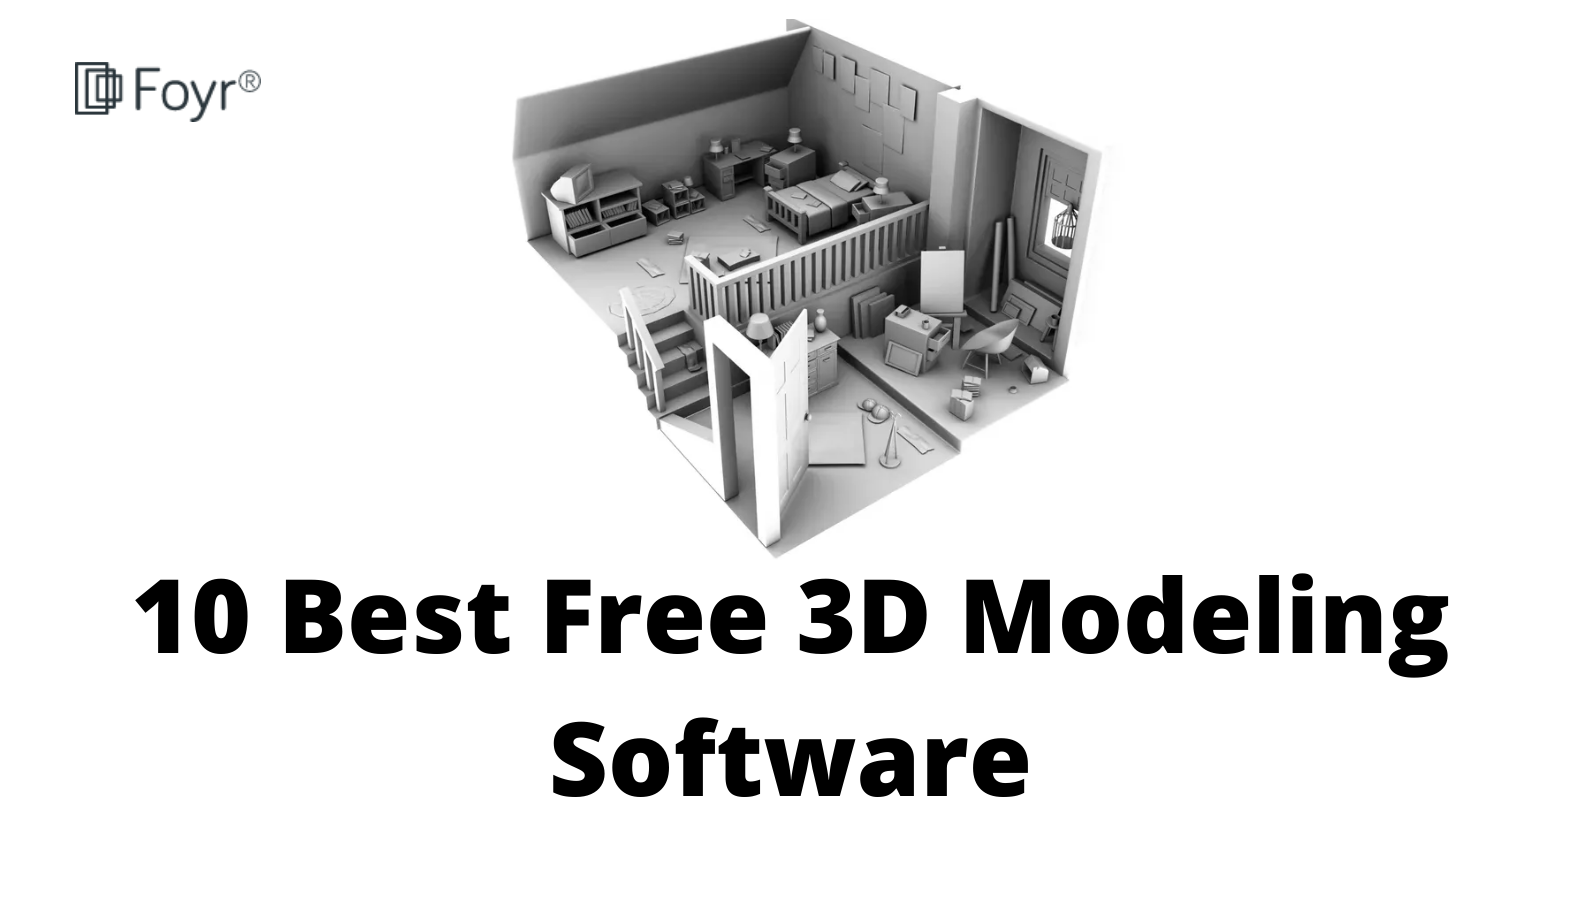 10-best-free-3d-modeling-software-of-2022-foyr-2022